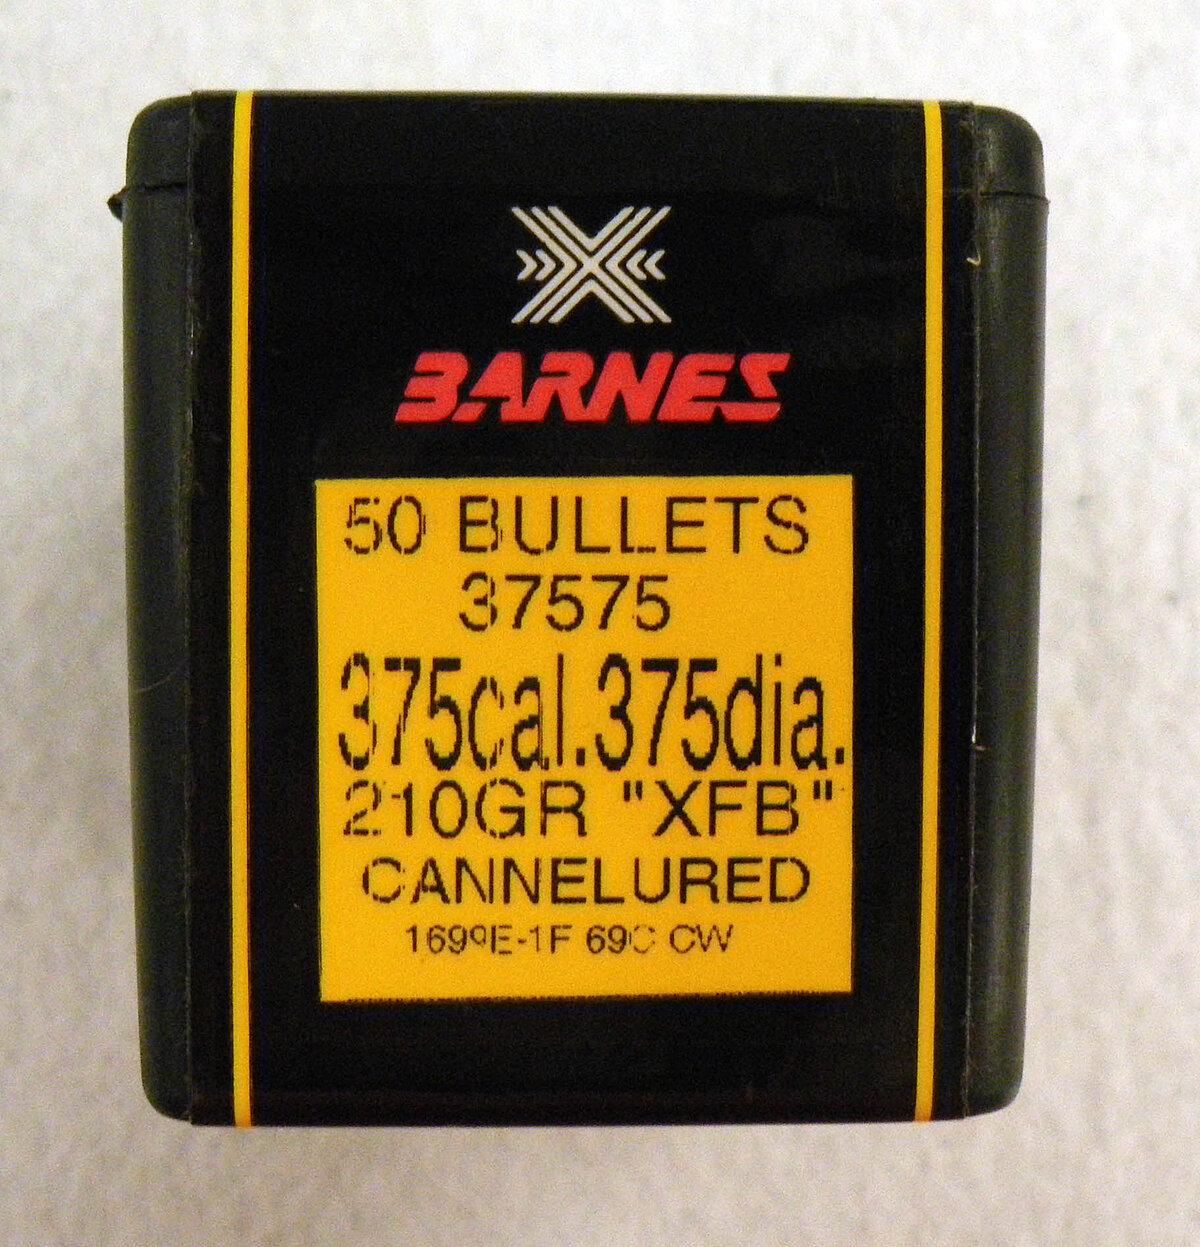 Barnes Geschosse .375 210gr XFB